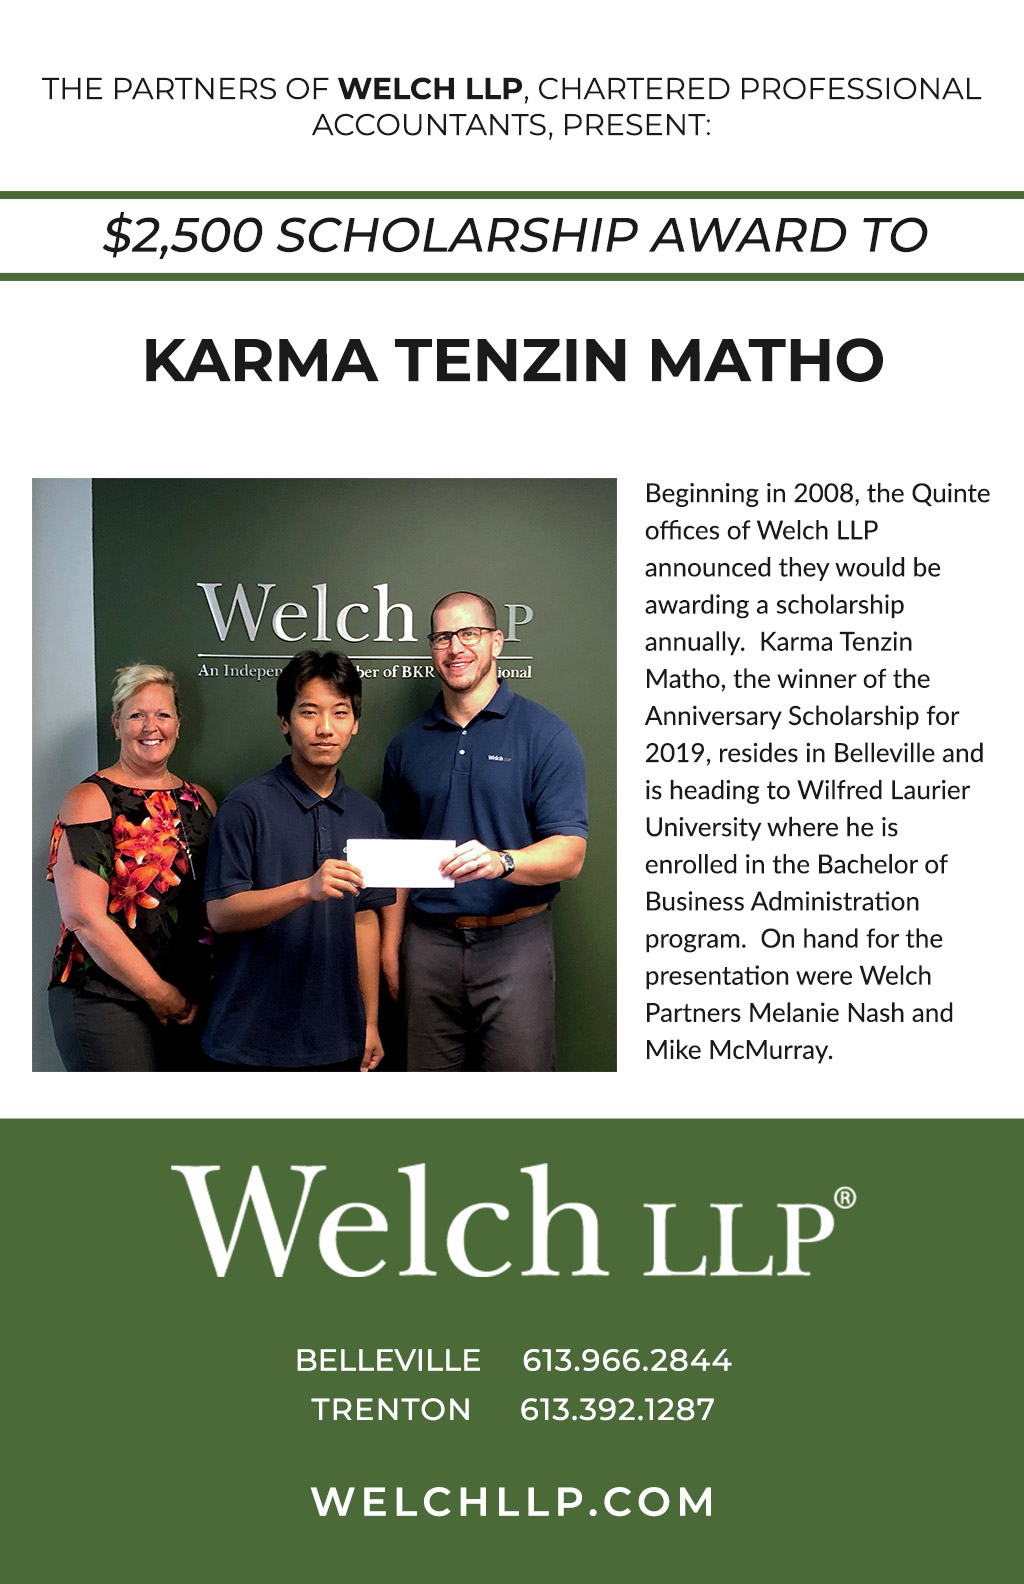 Welch LLP Partners present Karma Tenzin Matho a $2,500 scholarship